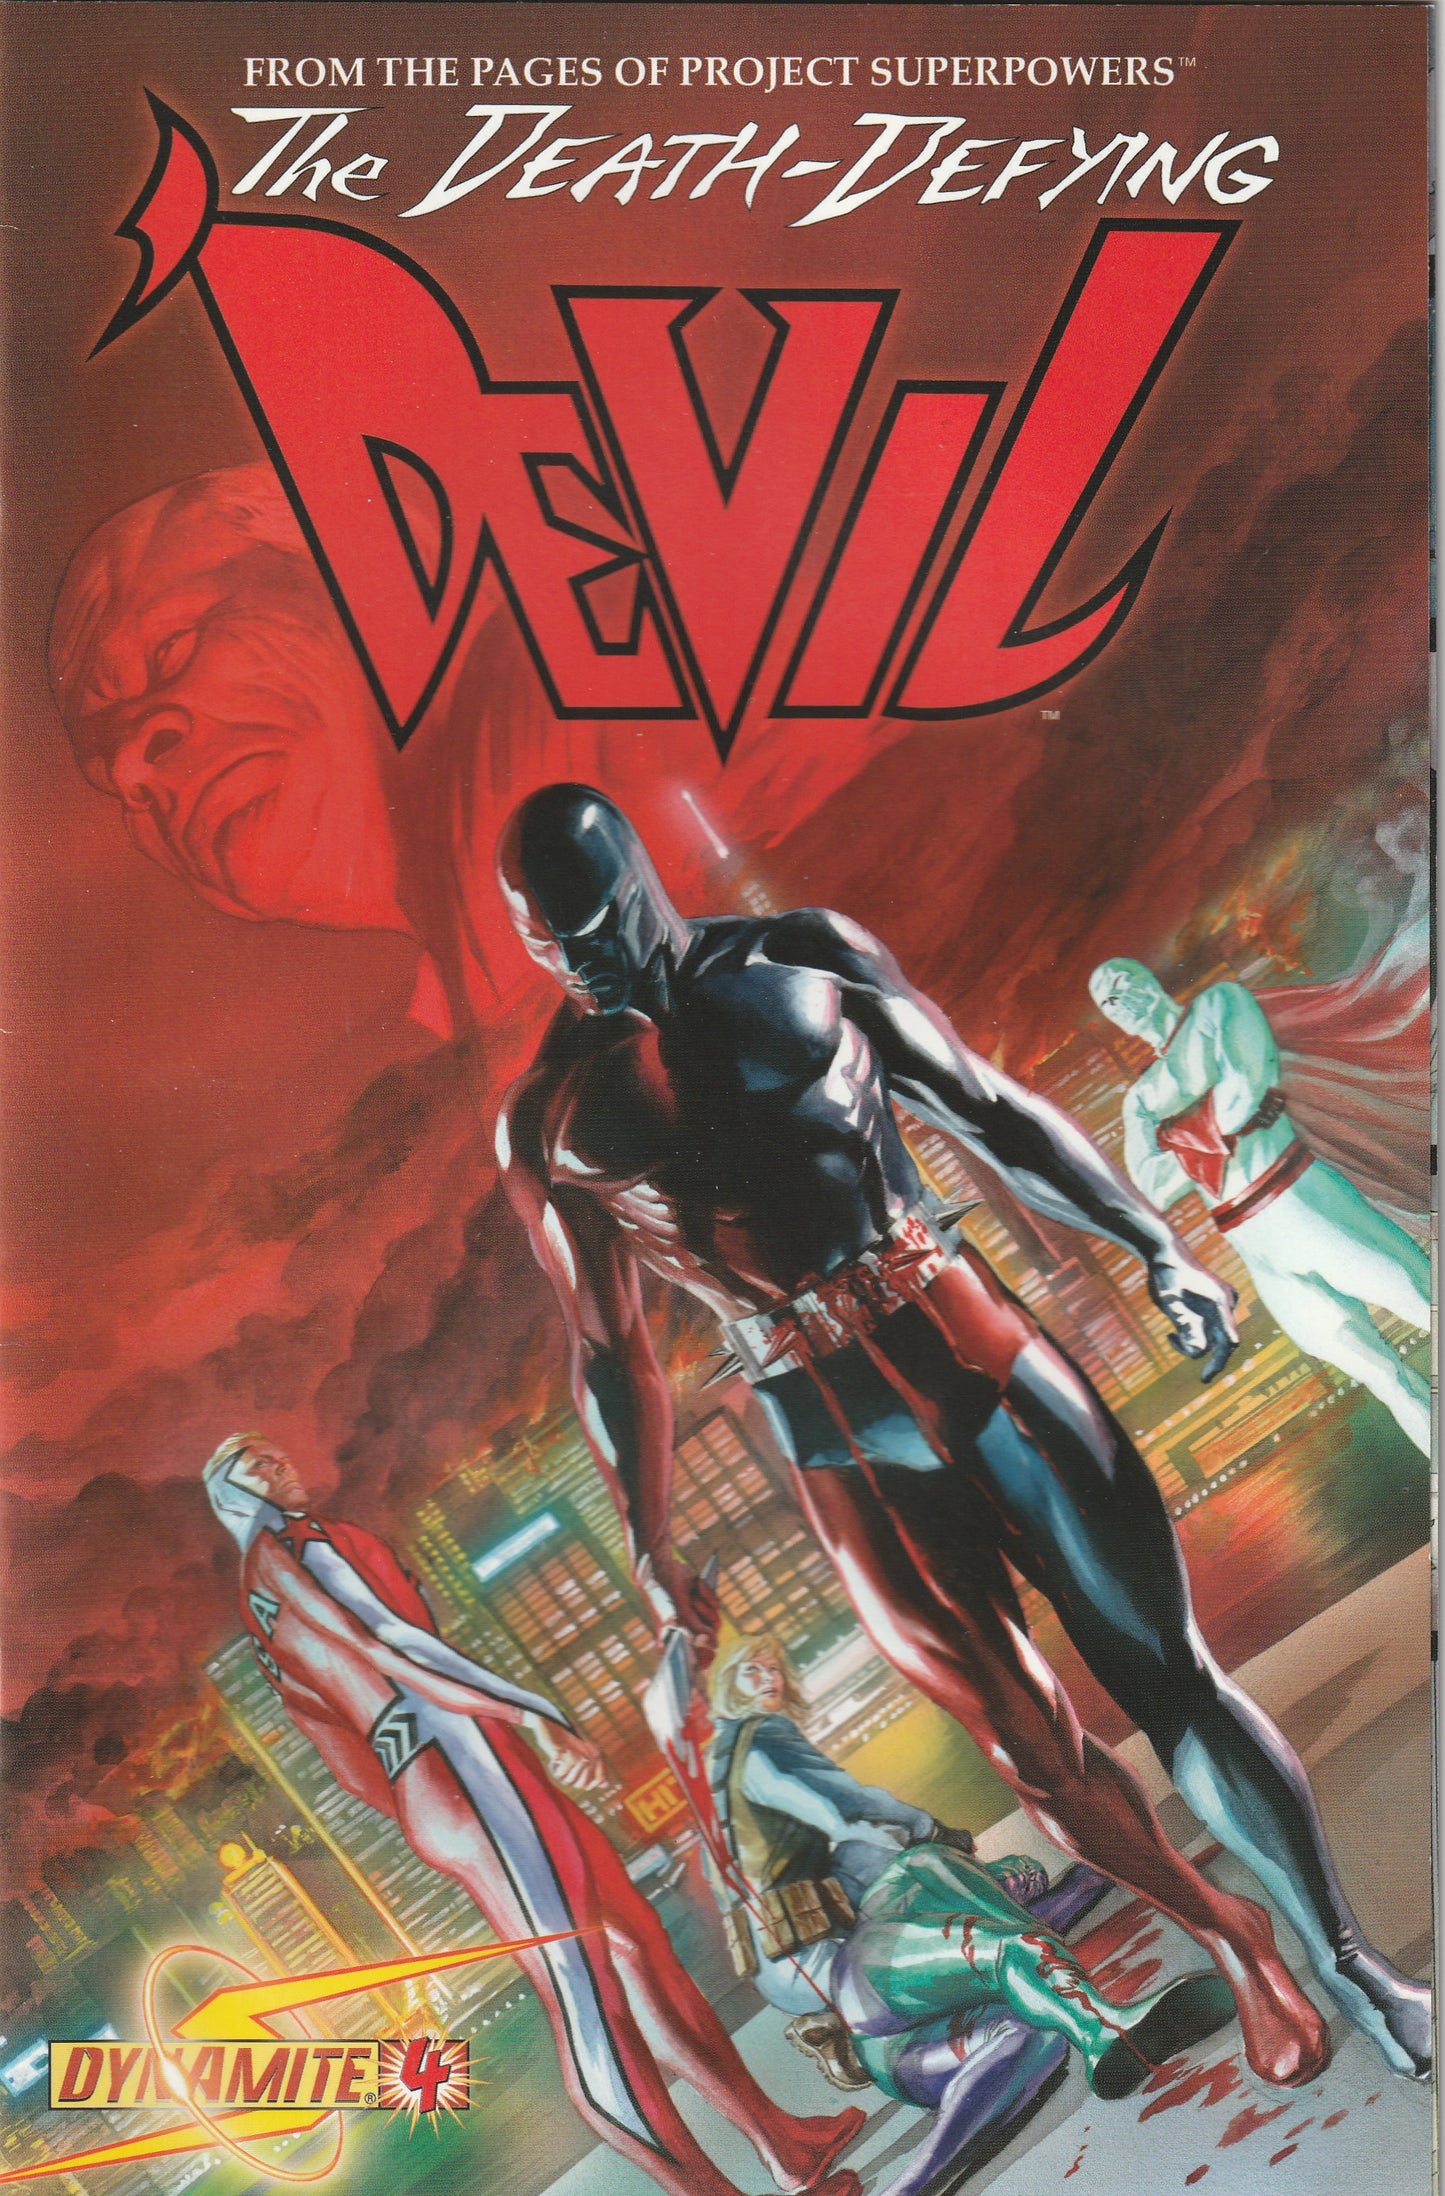 The Death-Defying Devil #4 (2009)